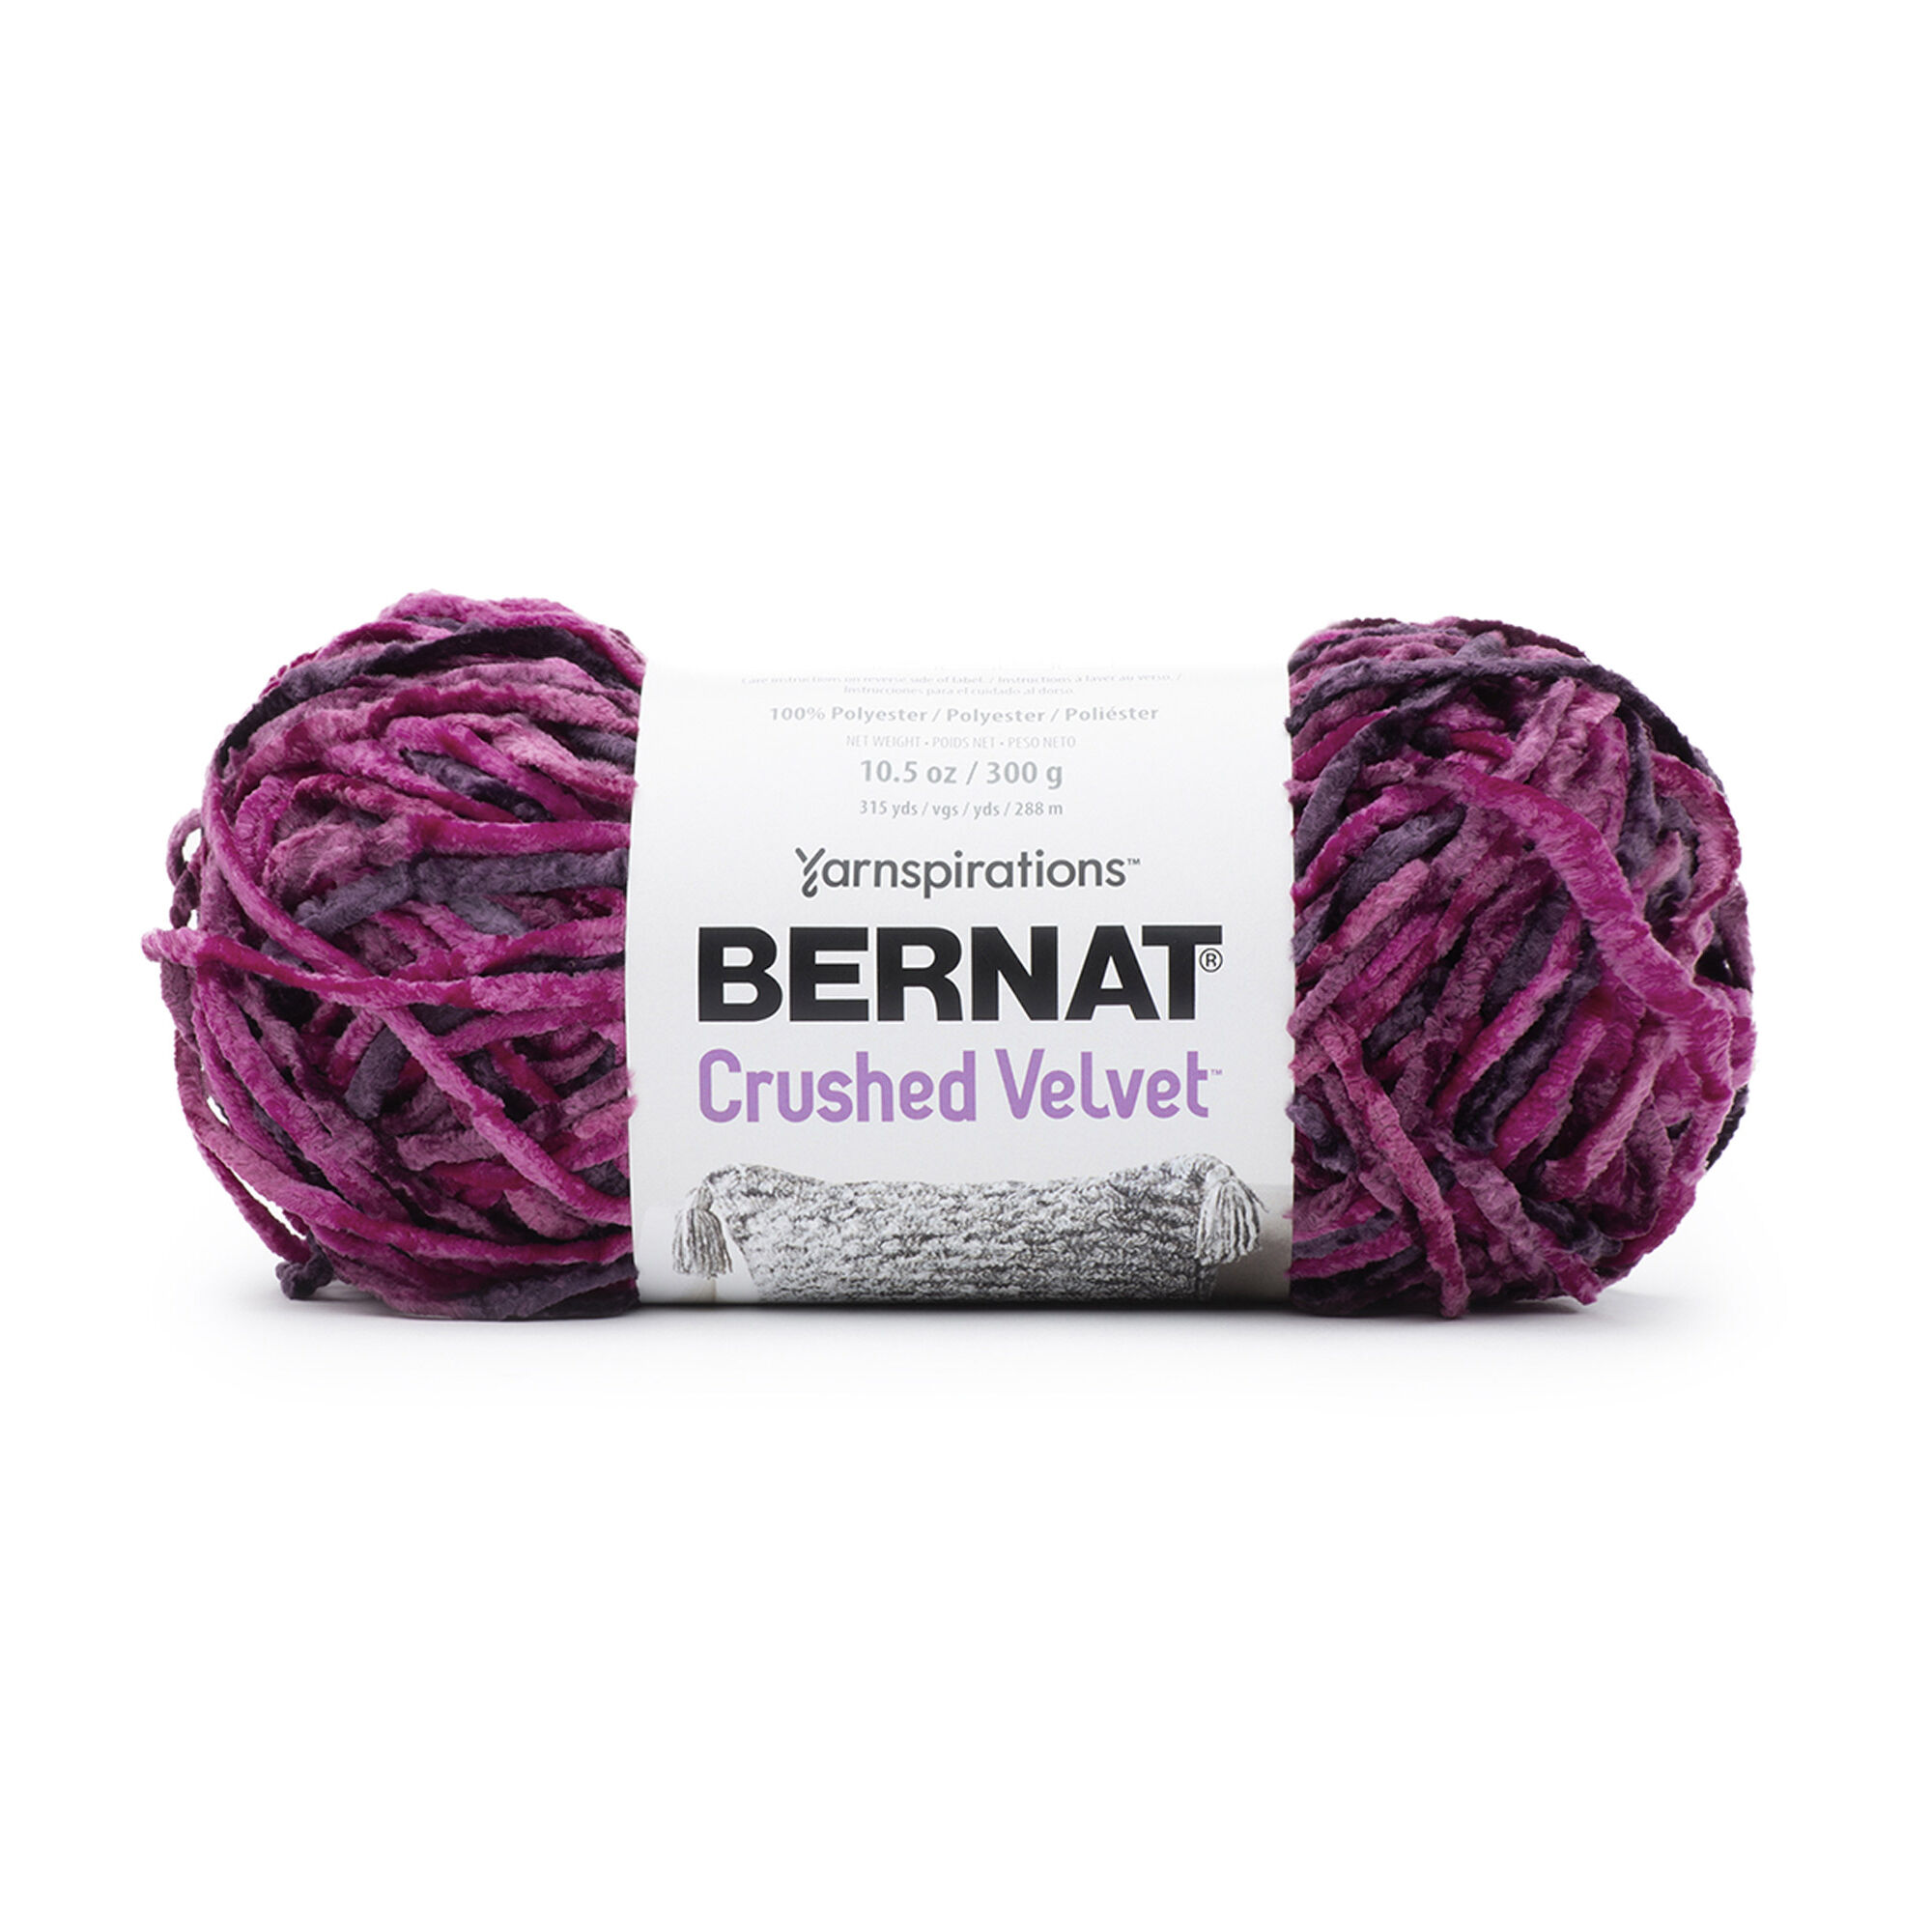 Bernat Softee Baby Cotton Yarn 120g